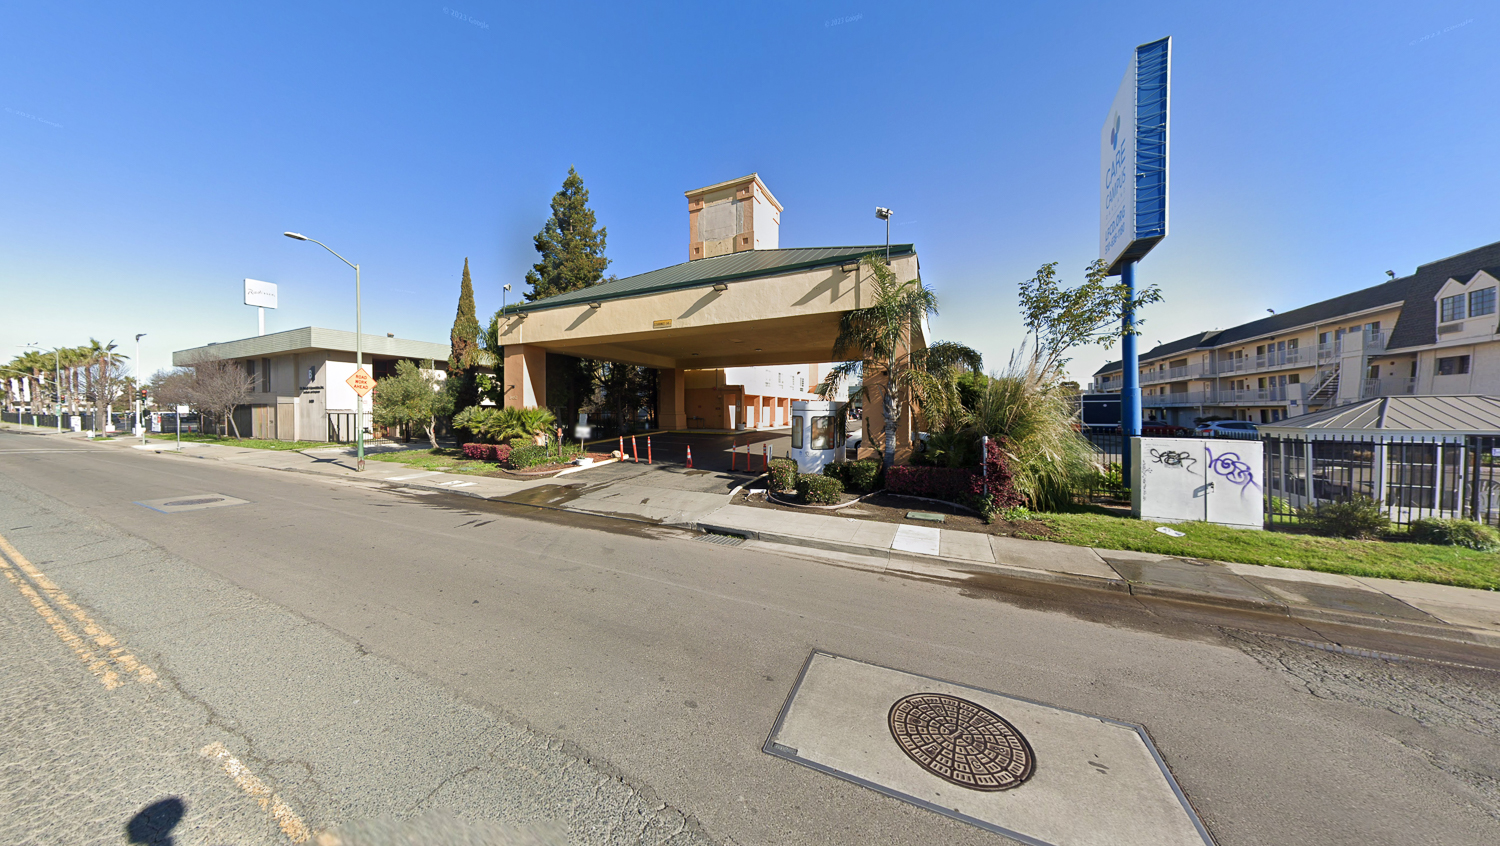 8452 Edes Avenue, image via Google Street View